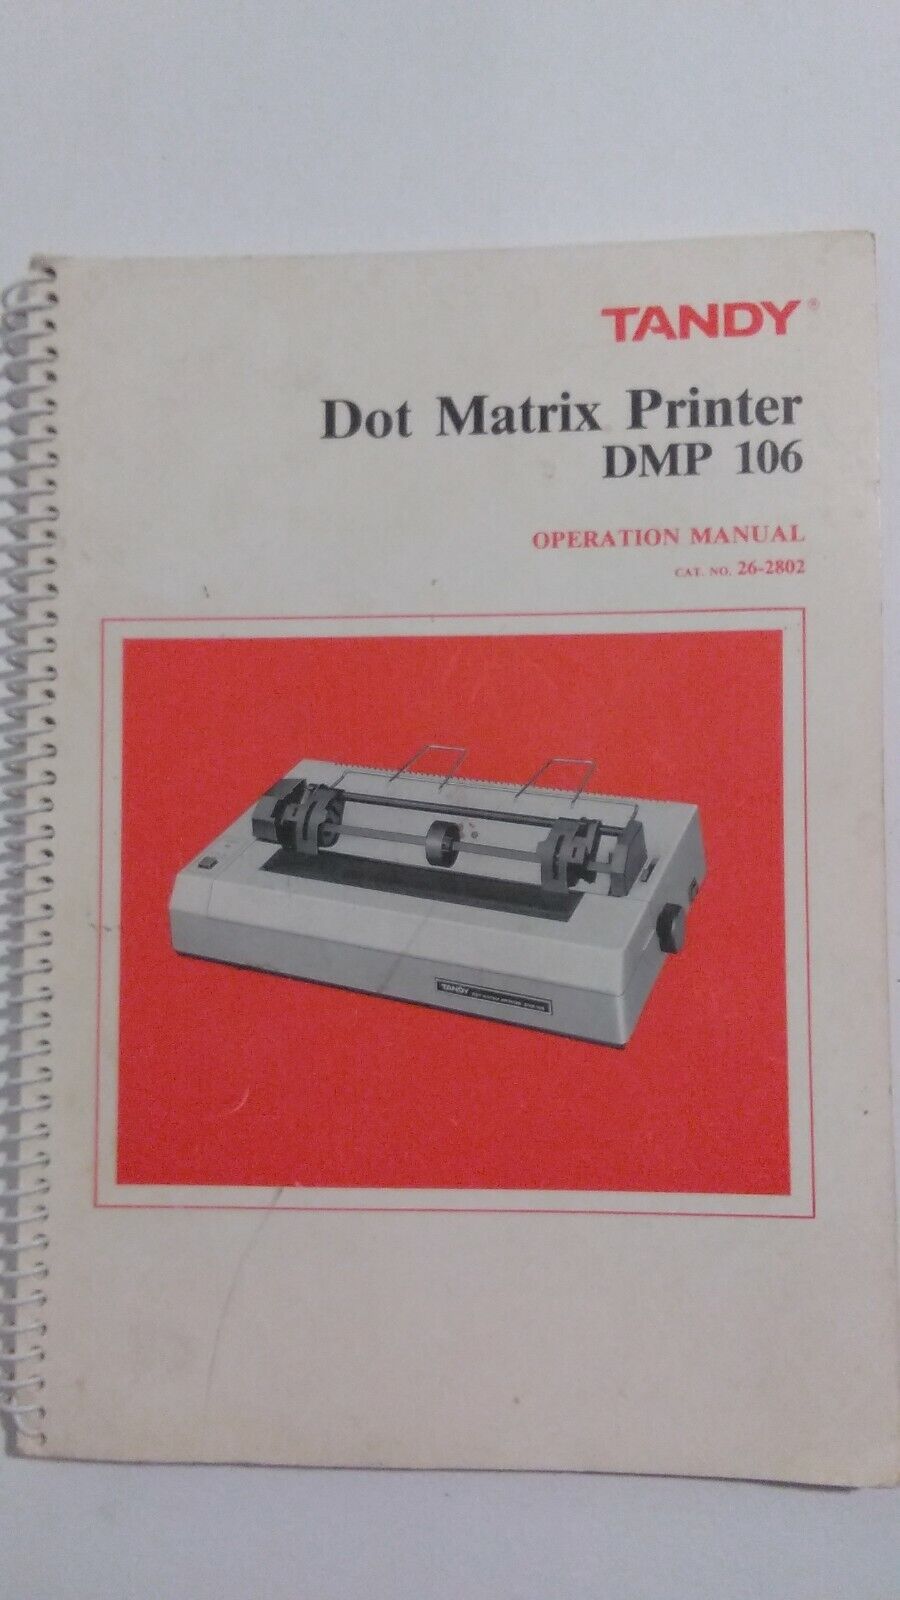 Tandy Dot Matrix Printer DMP-106 Operation Manual Catalog #26-2802